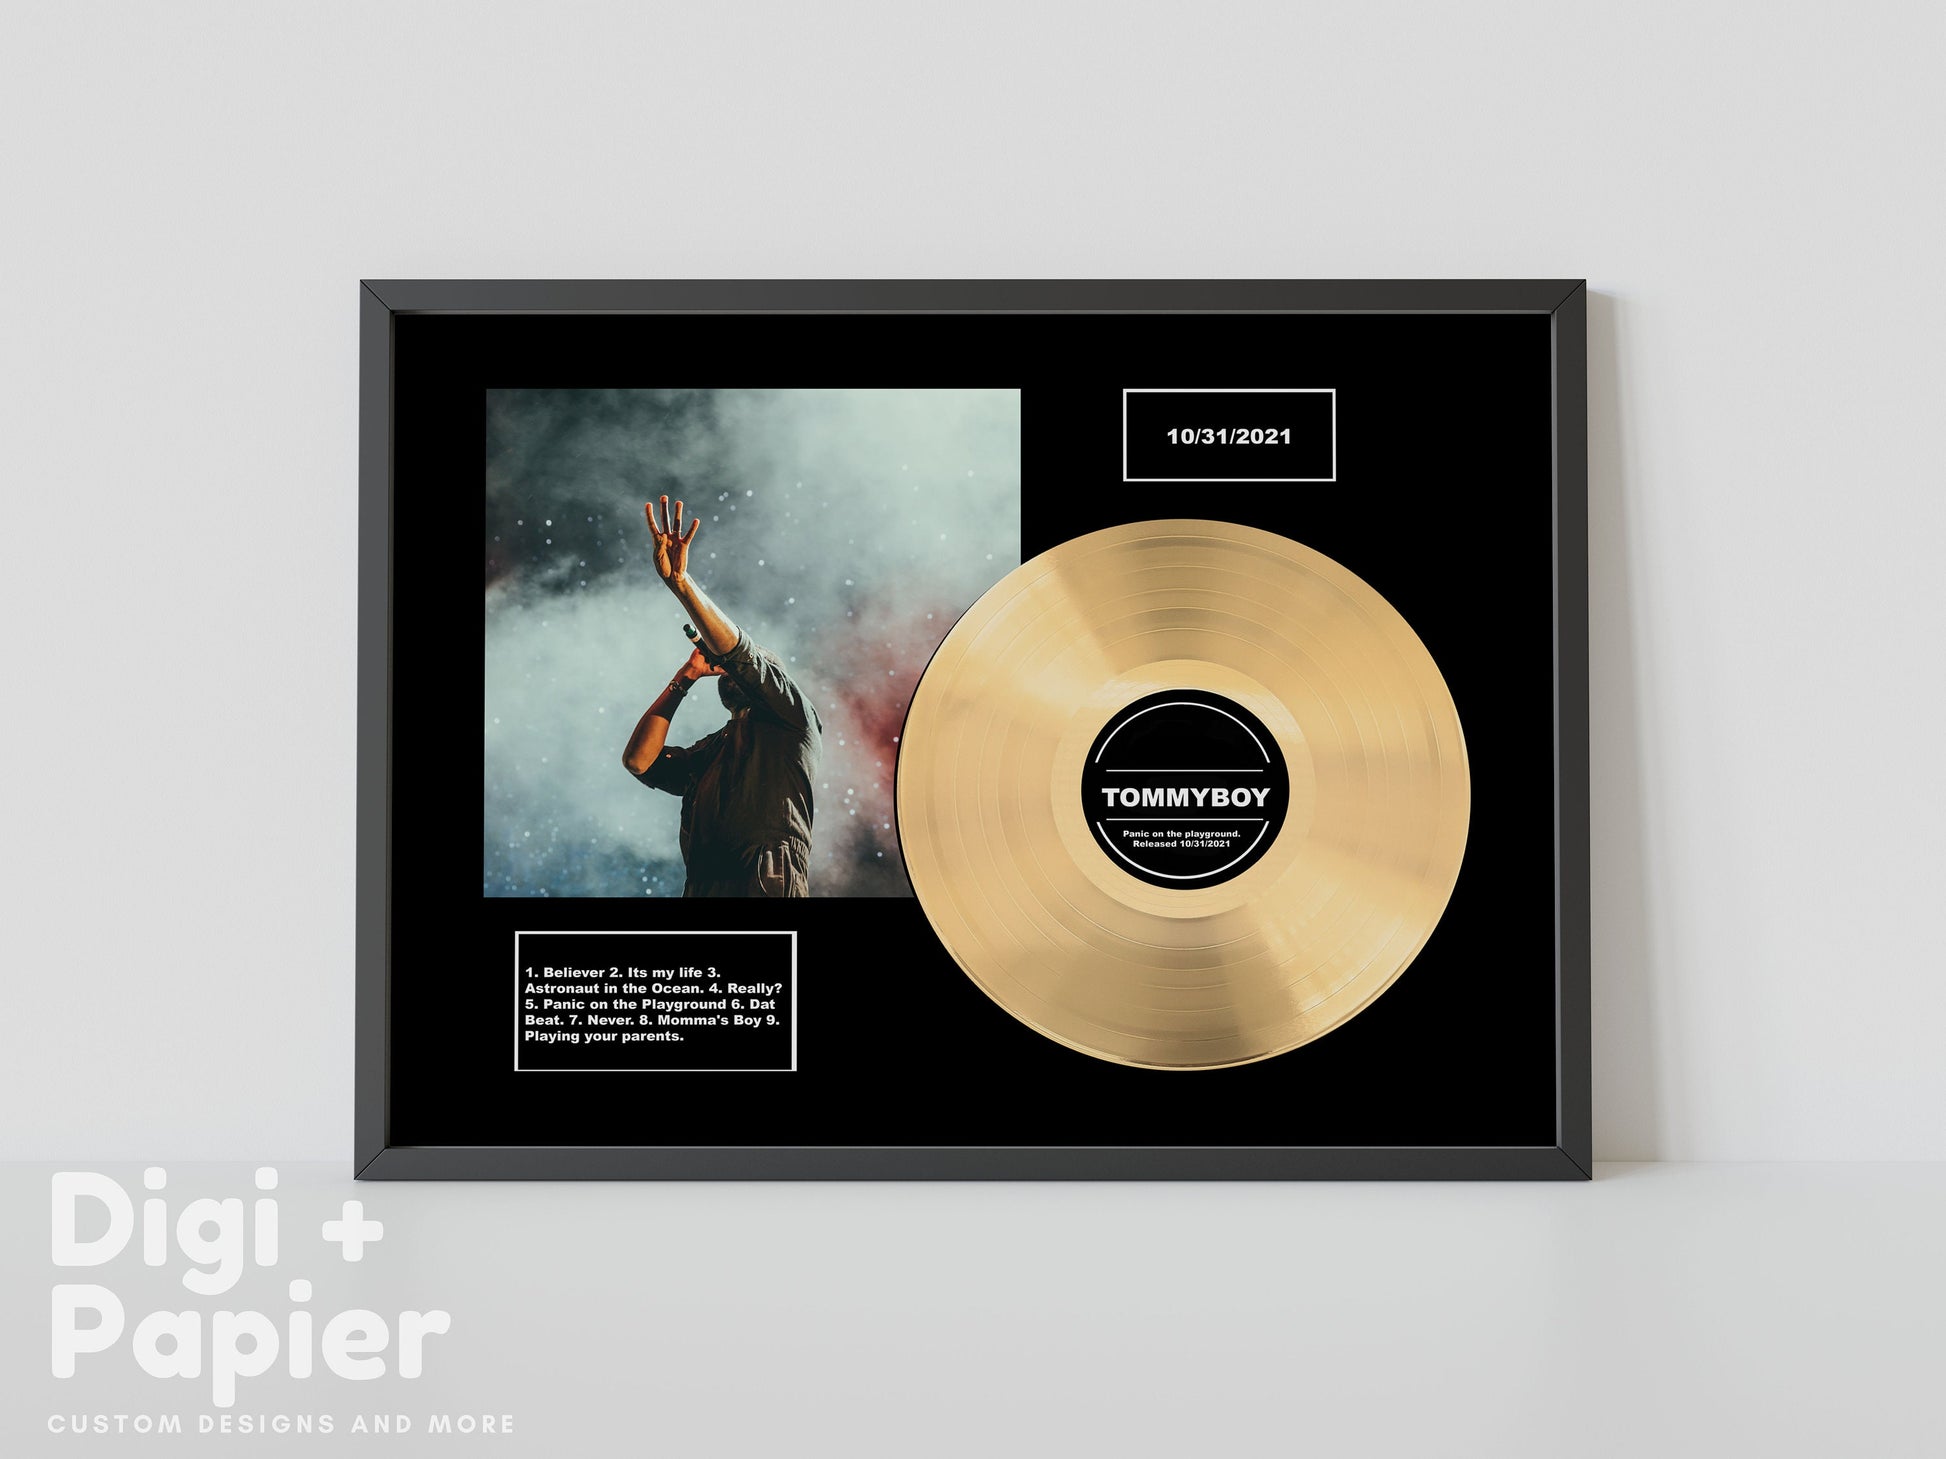 Vinyl Record Frame, Vinyl Record Display, Record Frame Cover , Record Album Frames , Gold Vinyl Album Frames, Vinyl Display Shelf, gift